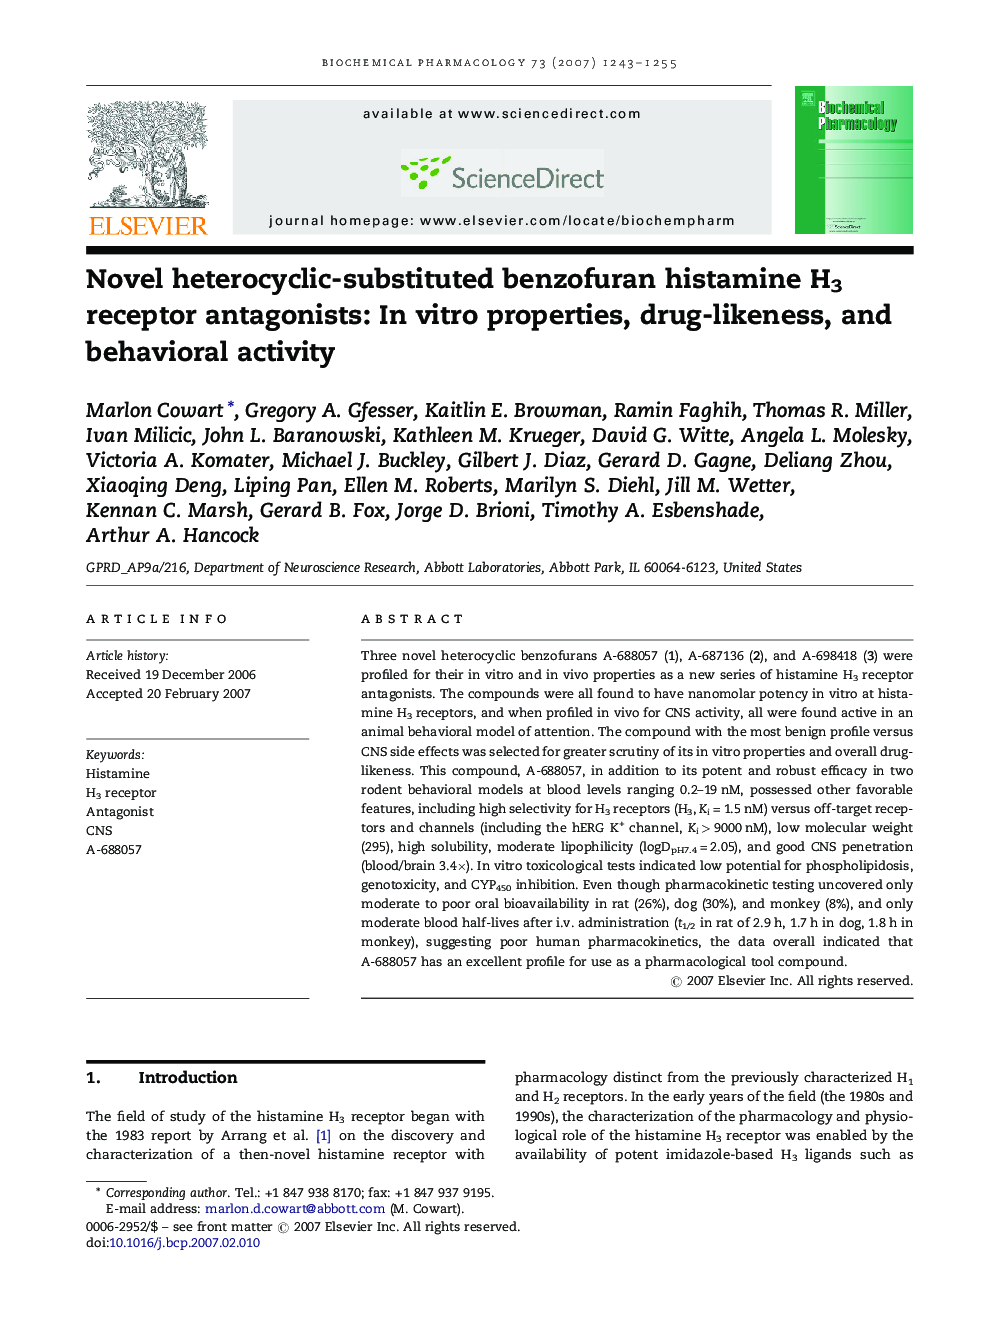 Novel heterocyclic-substituted benzofuran histamine H3 receptor antagonists: In vitro properties, drug-likeness, and behavioral activity